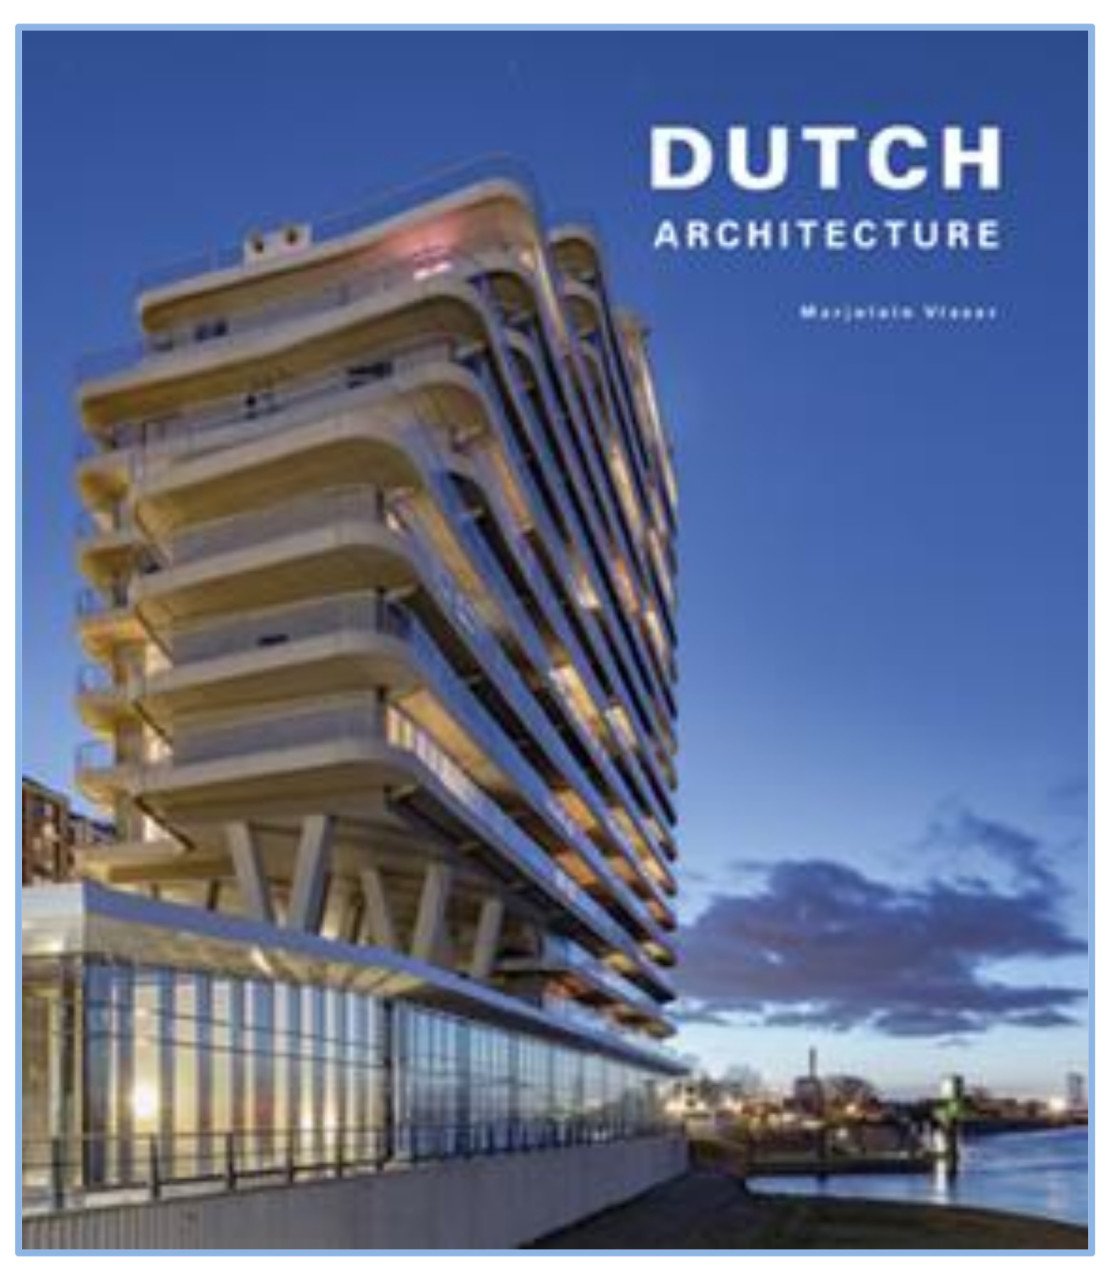 DUTCH Architects